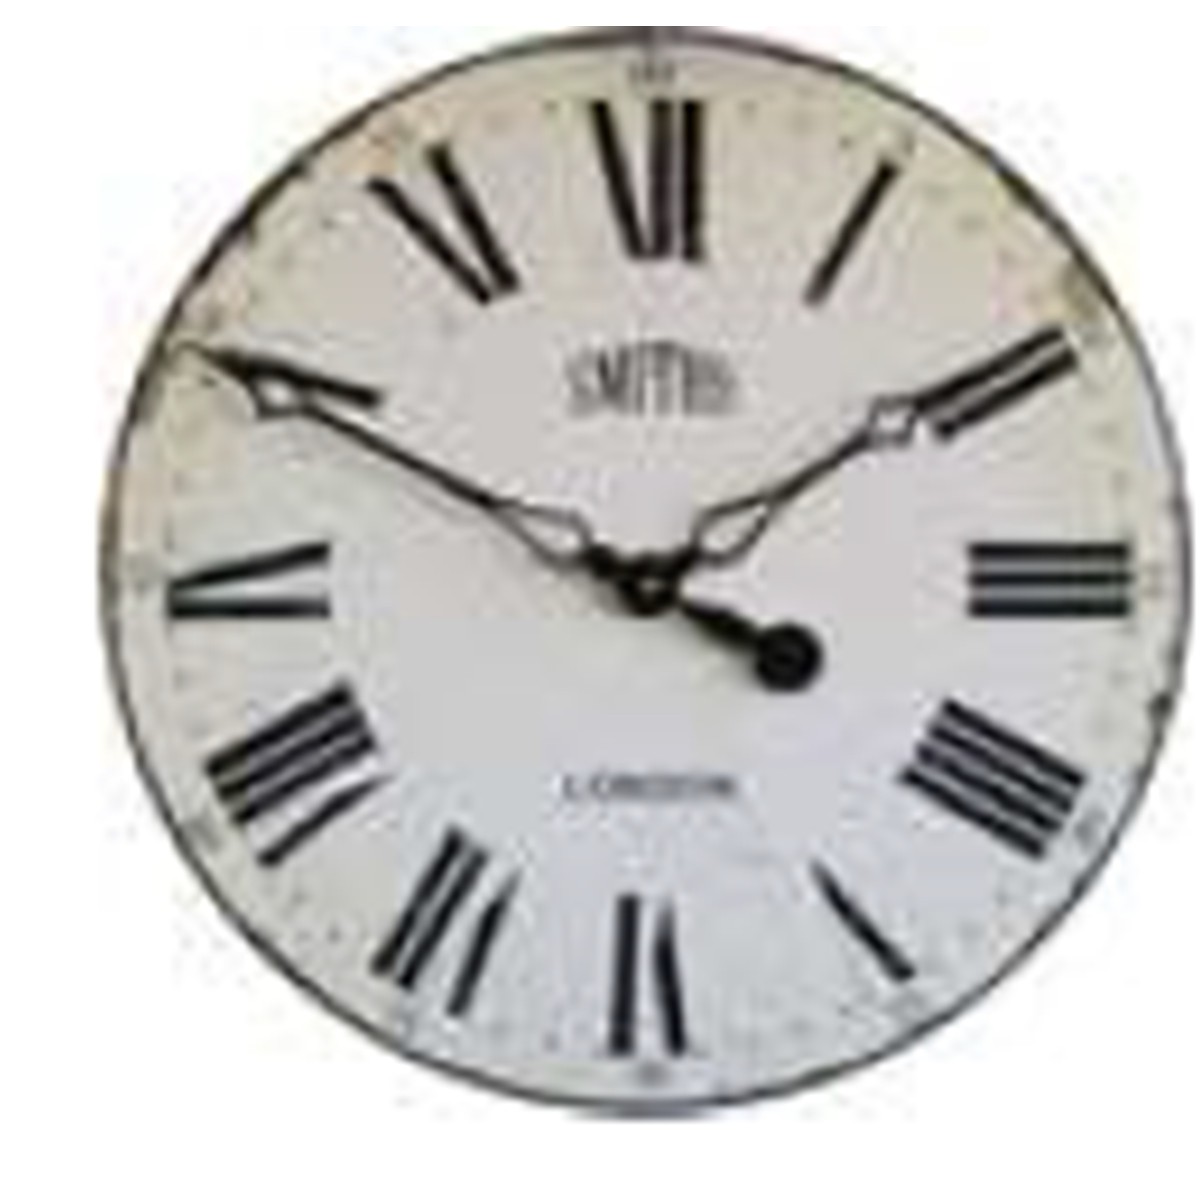   Horloge Smiths blanche GAL/SMITHS/WHI  50cm